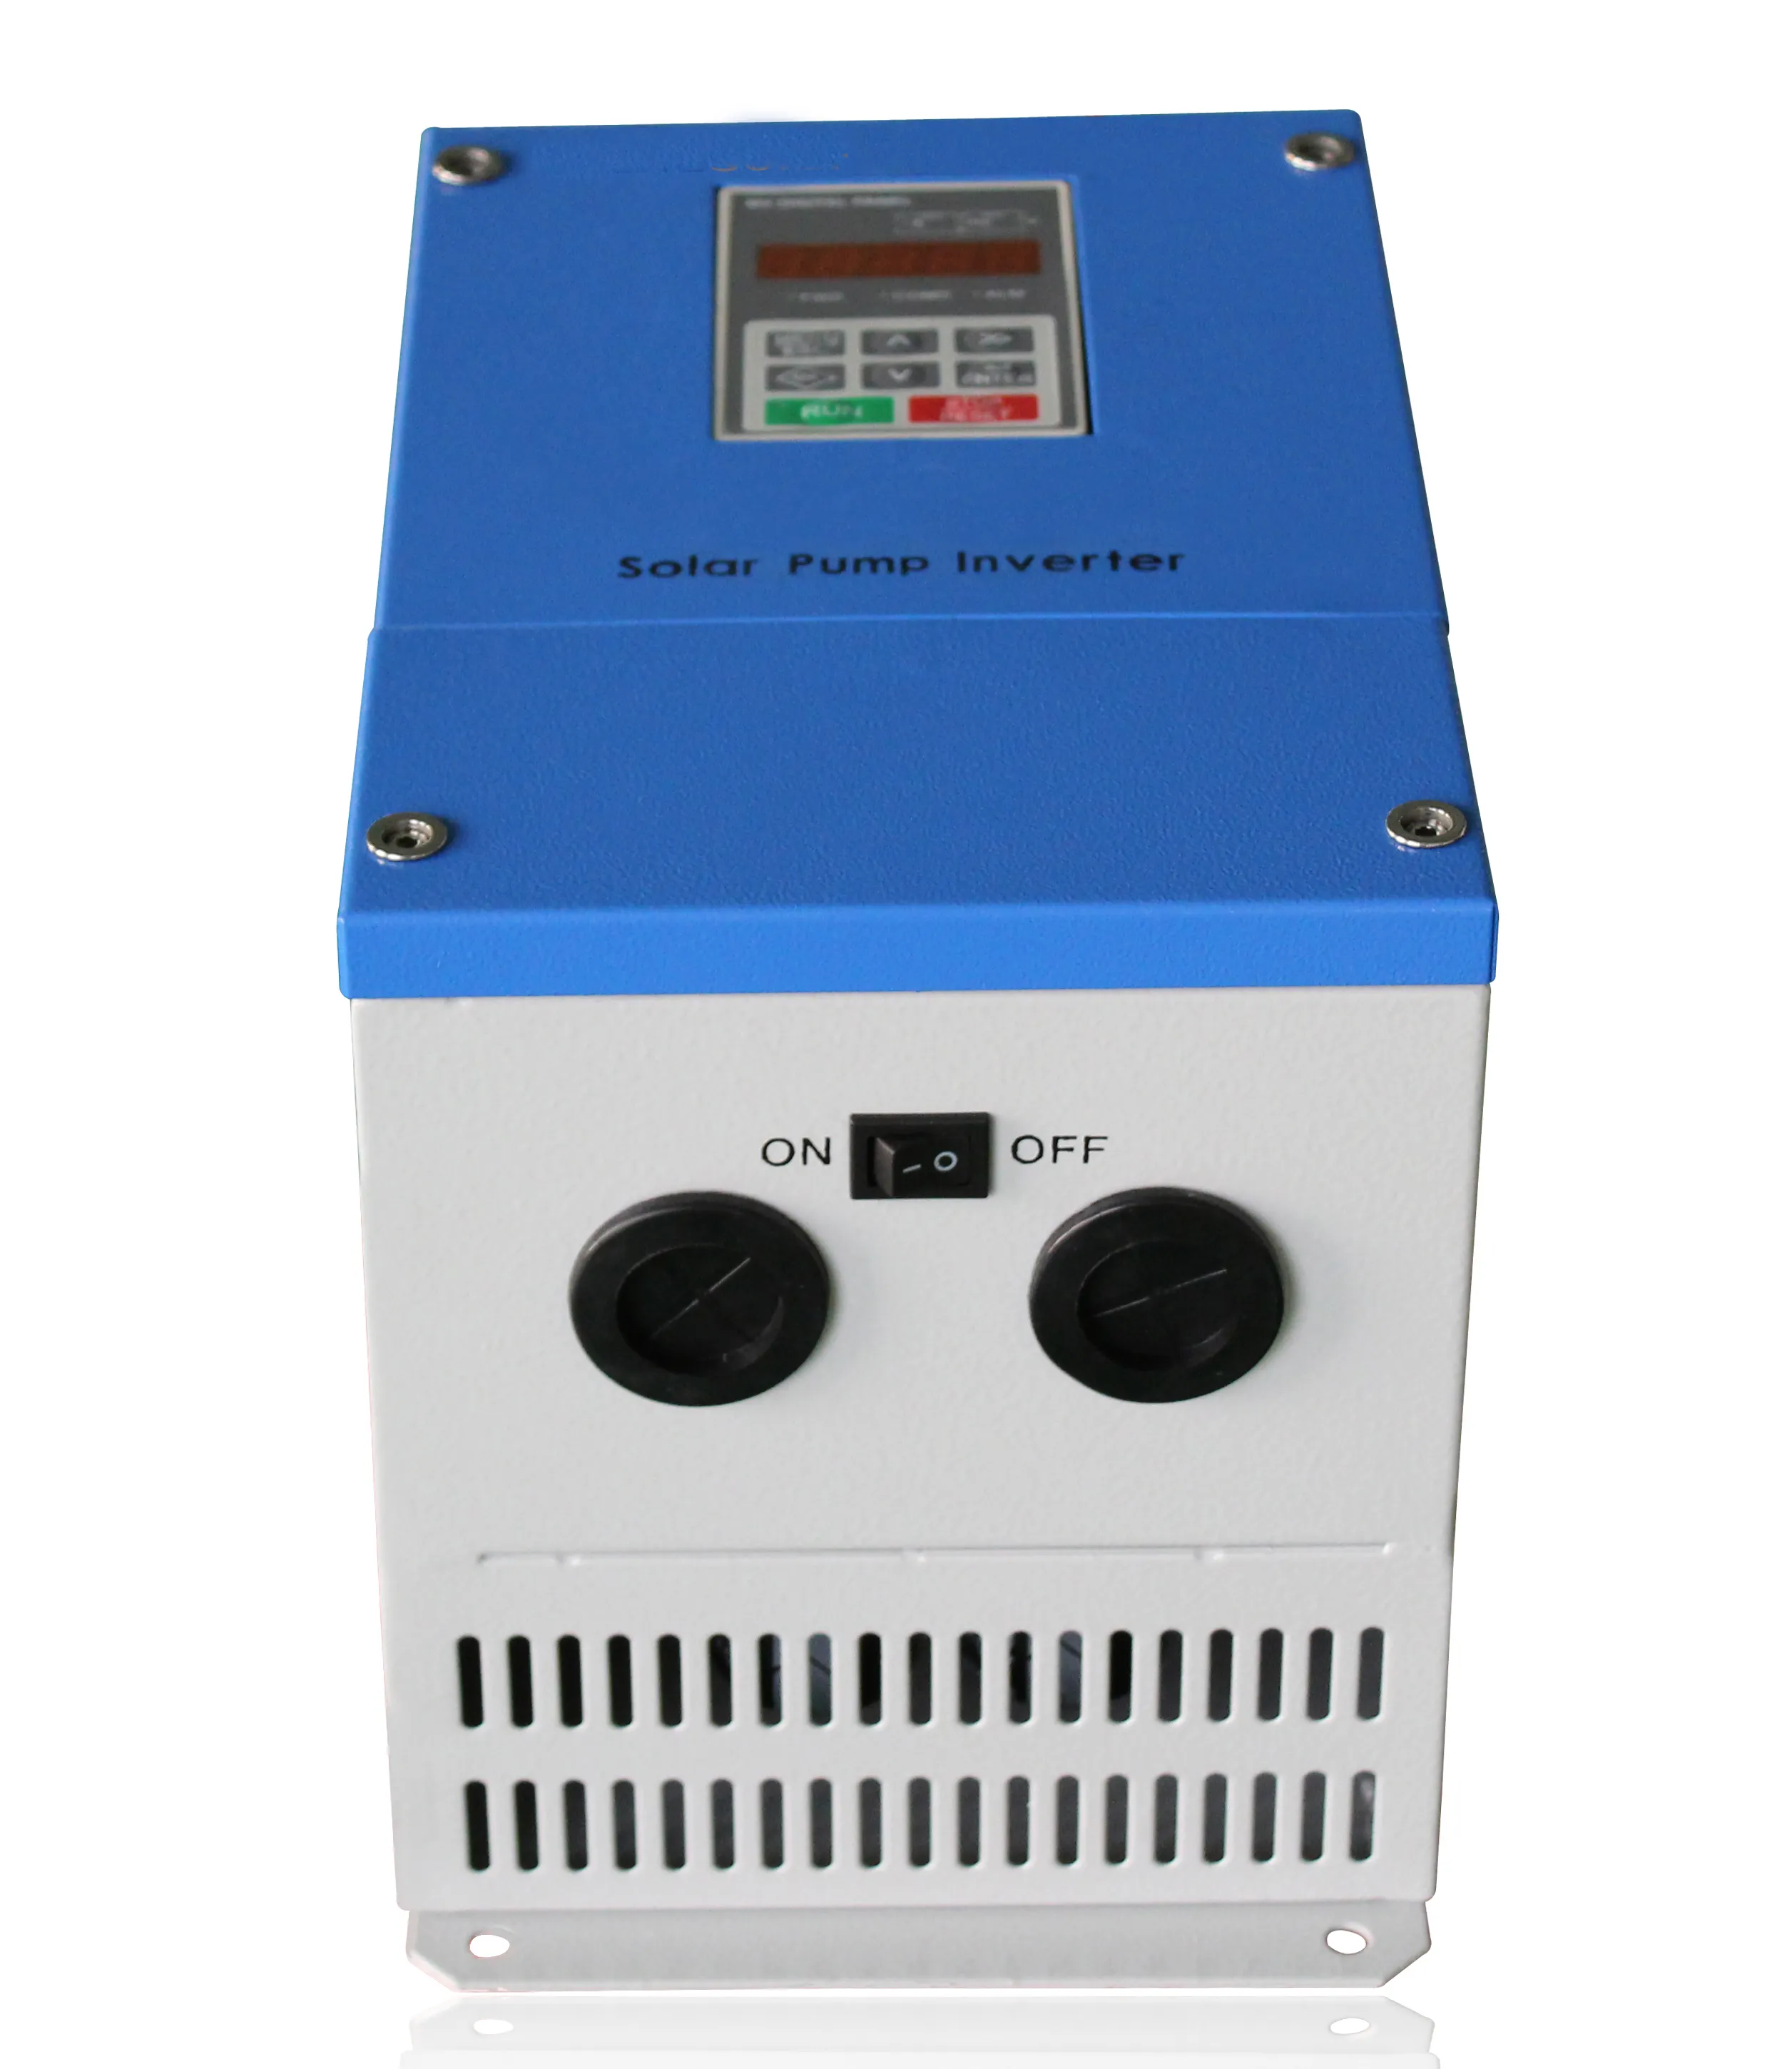 Inverter trifase 380-440v MPPT controller 7.5kW inverter pompa acqua solare